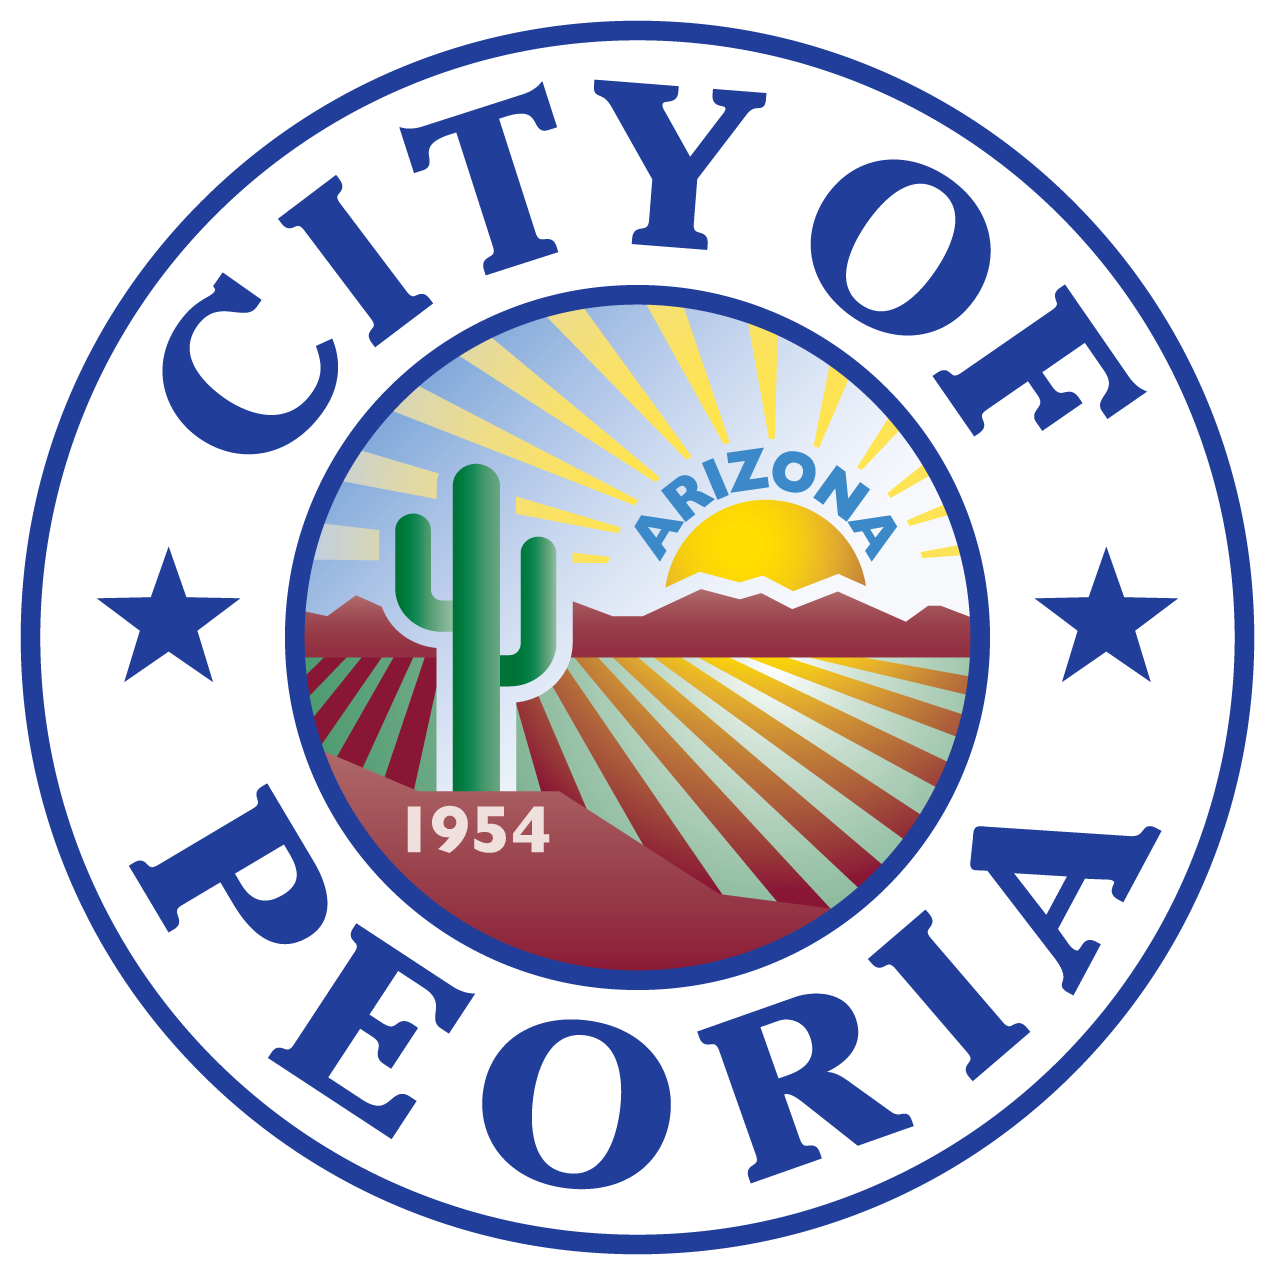 City of Peoria 2015